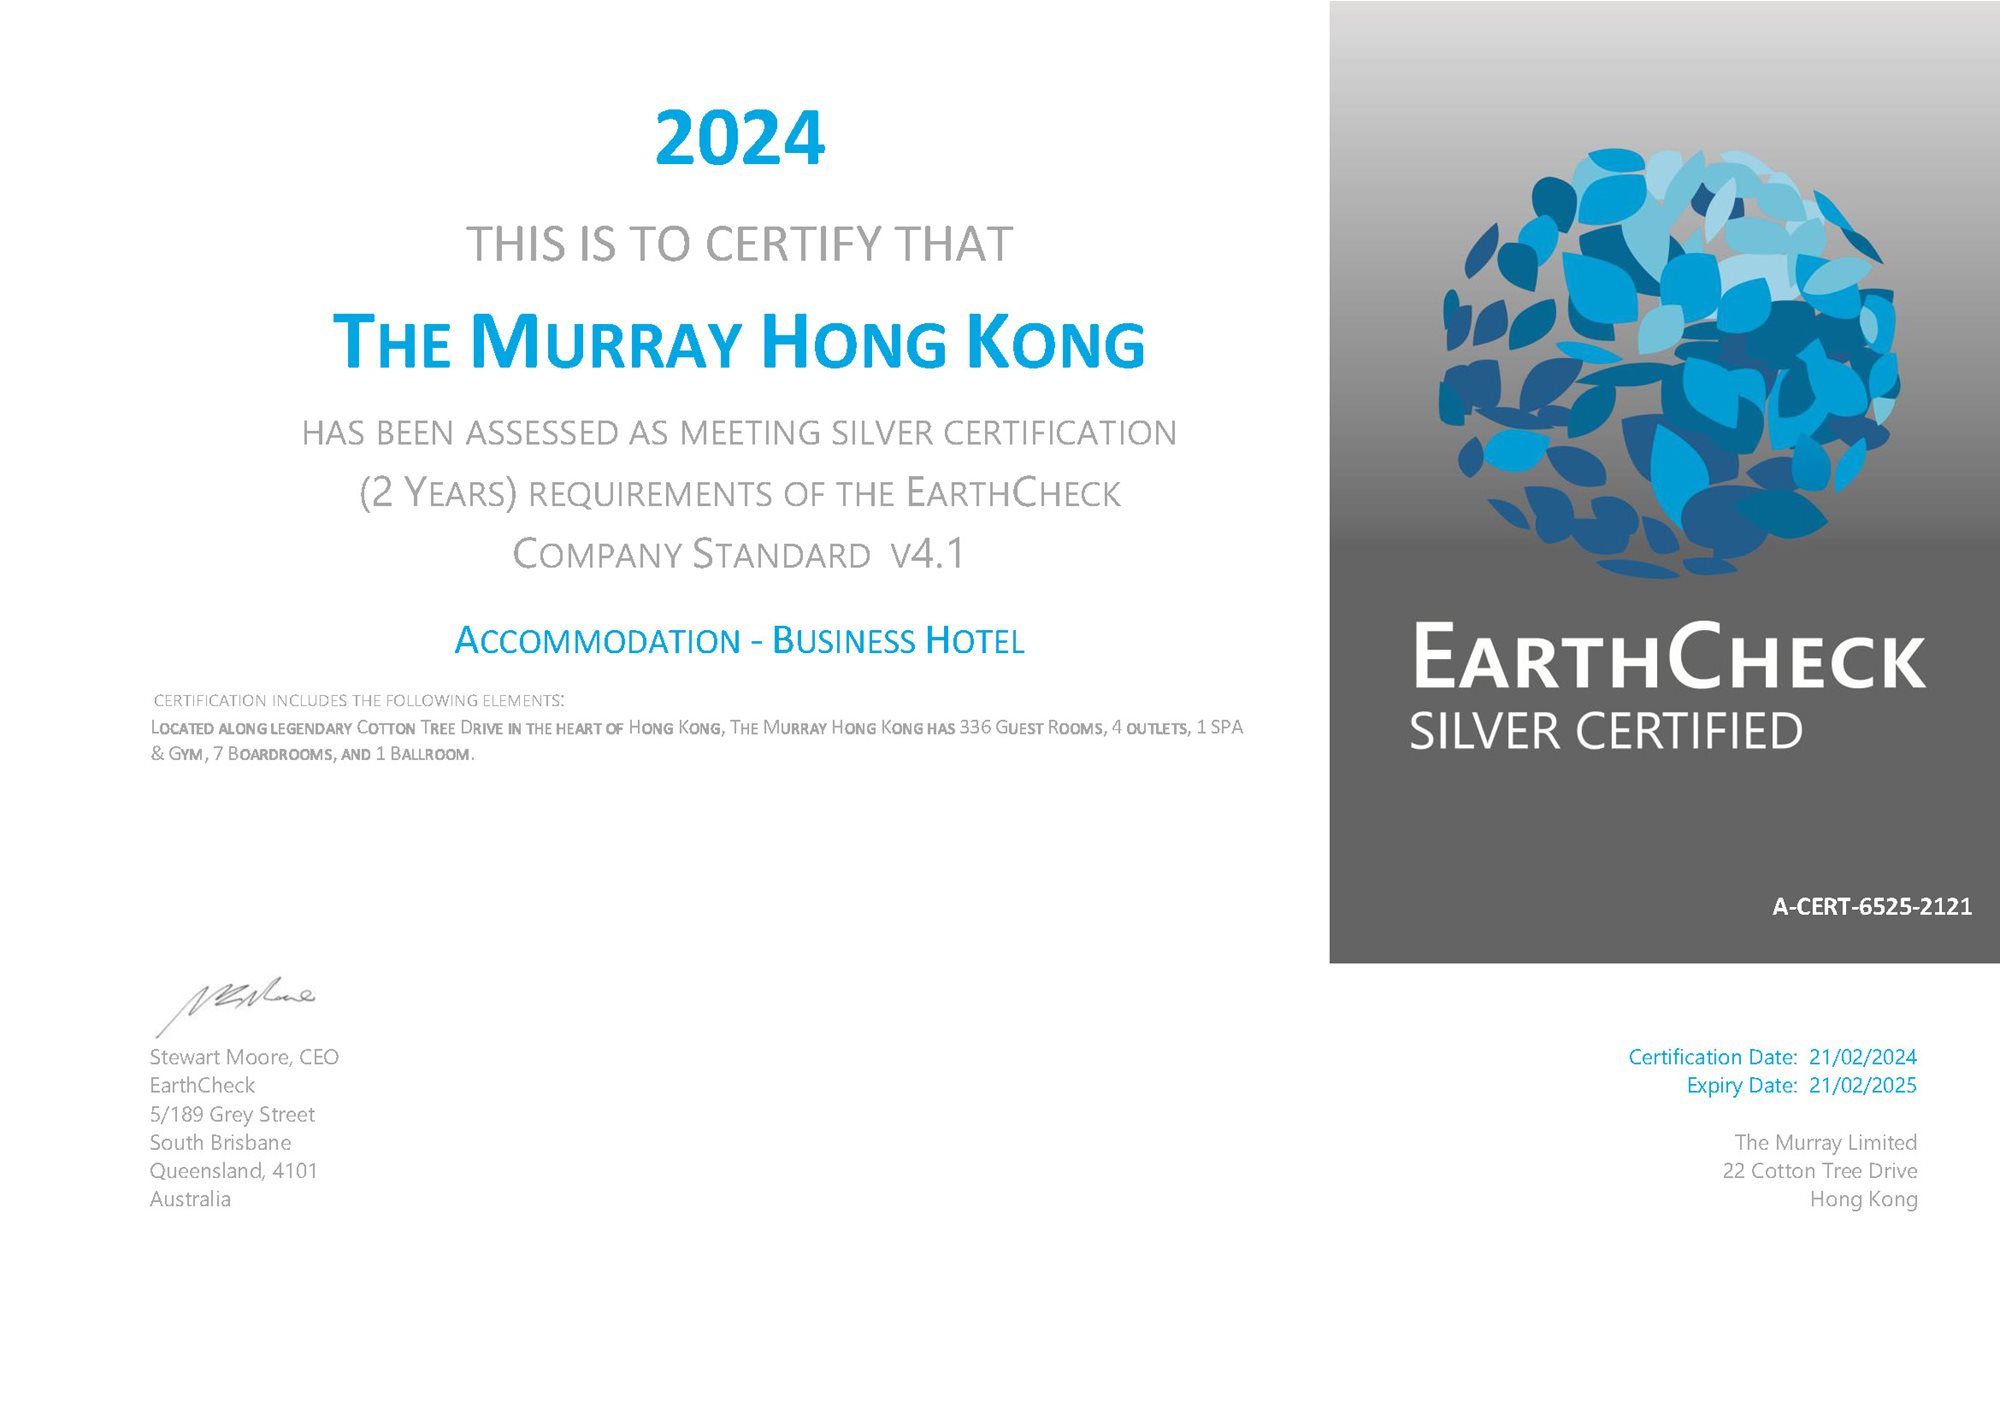 The-Murray-Hong-Kong-2024-Certified-Silver-(1).jpg